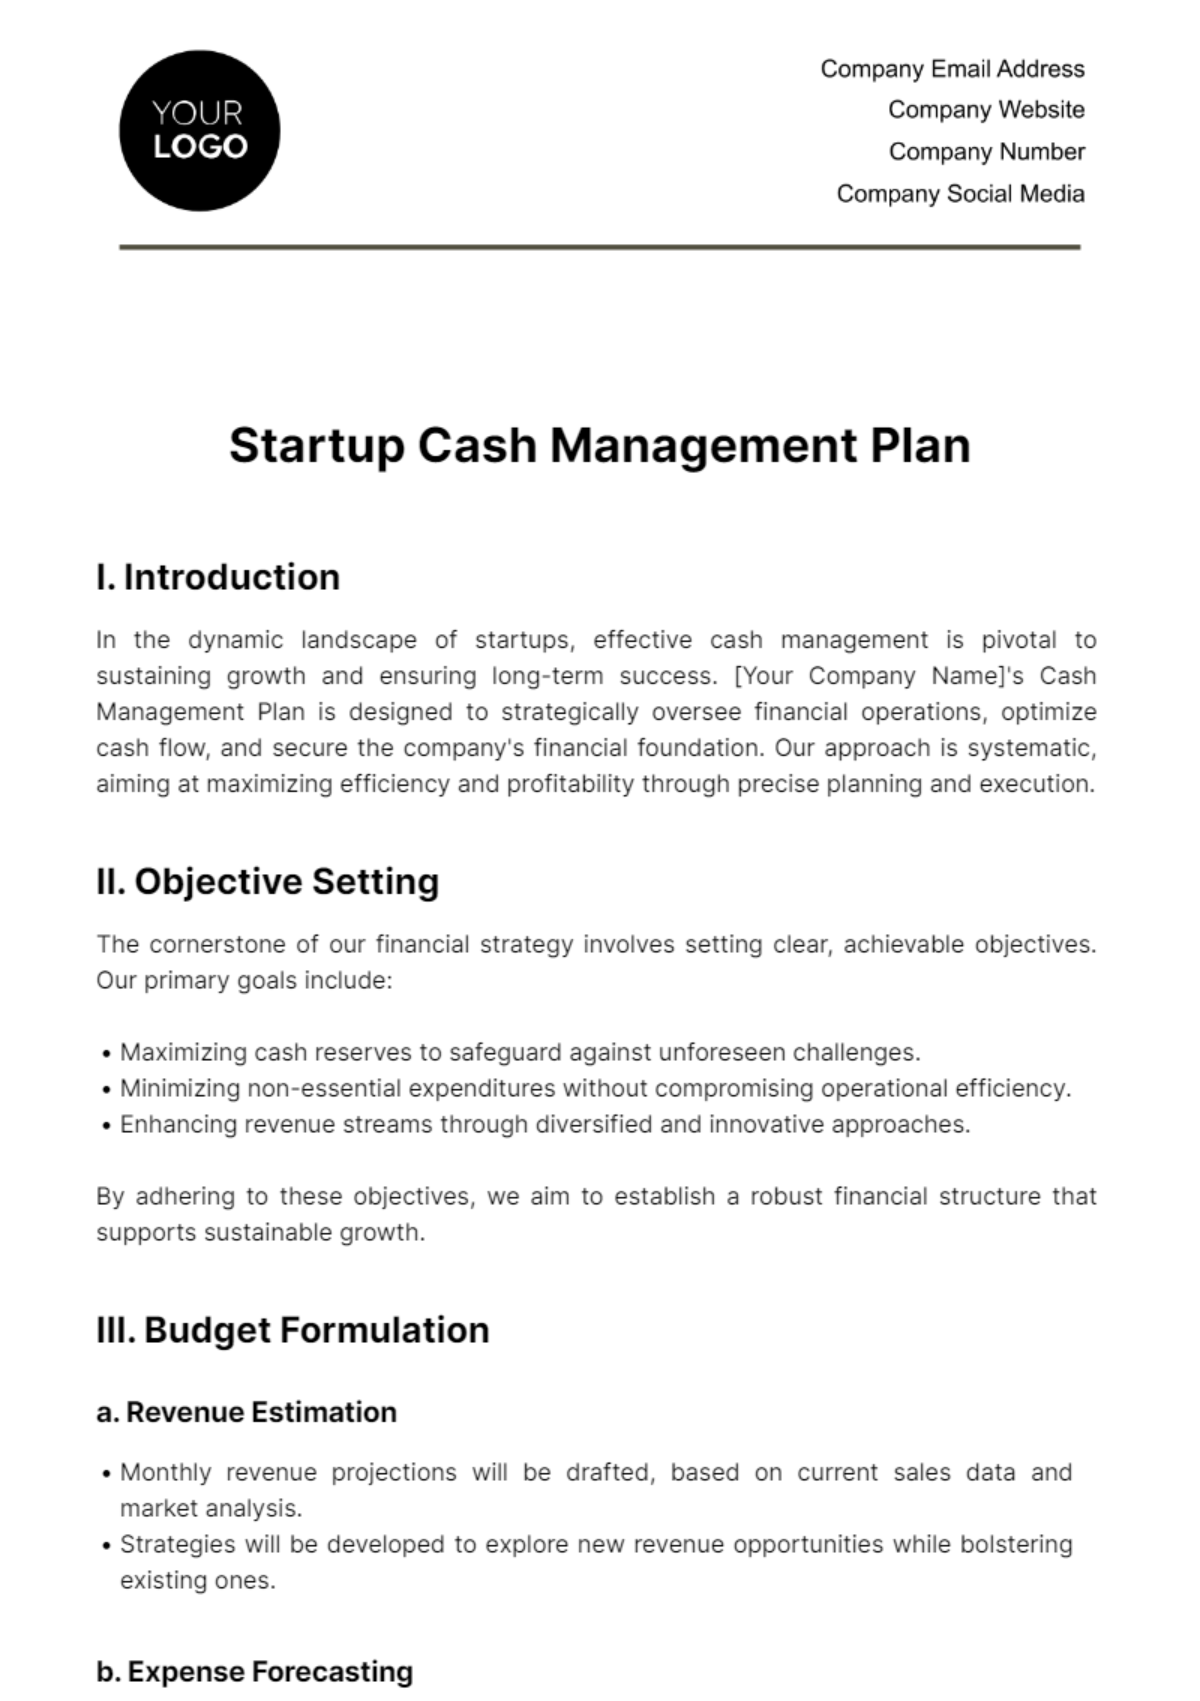 Startup Cash Management Plan Template